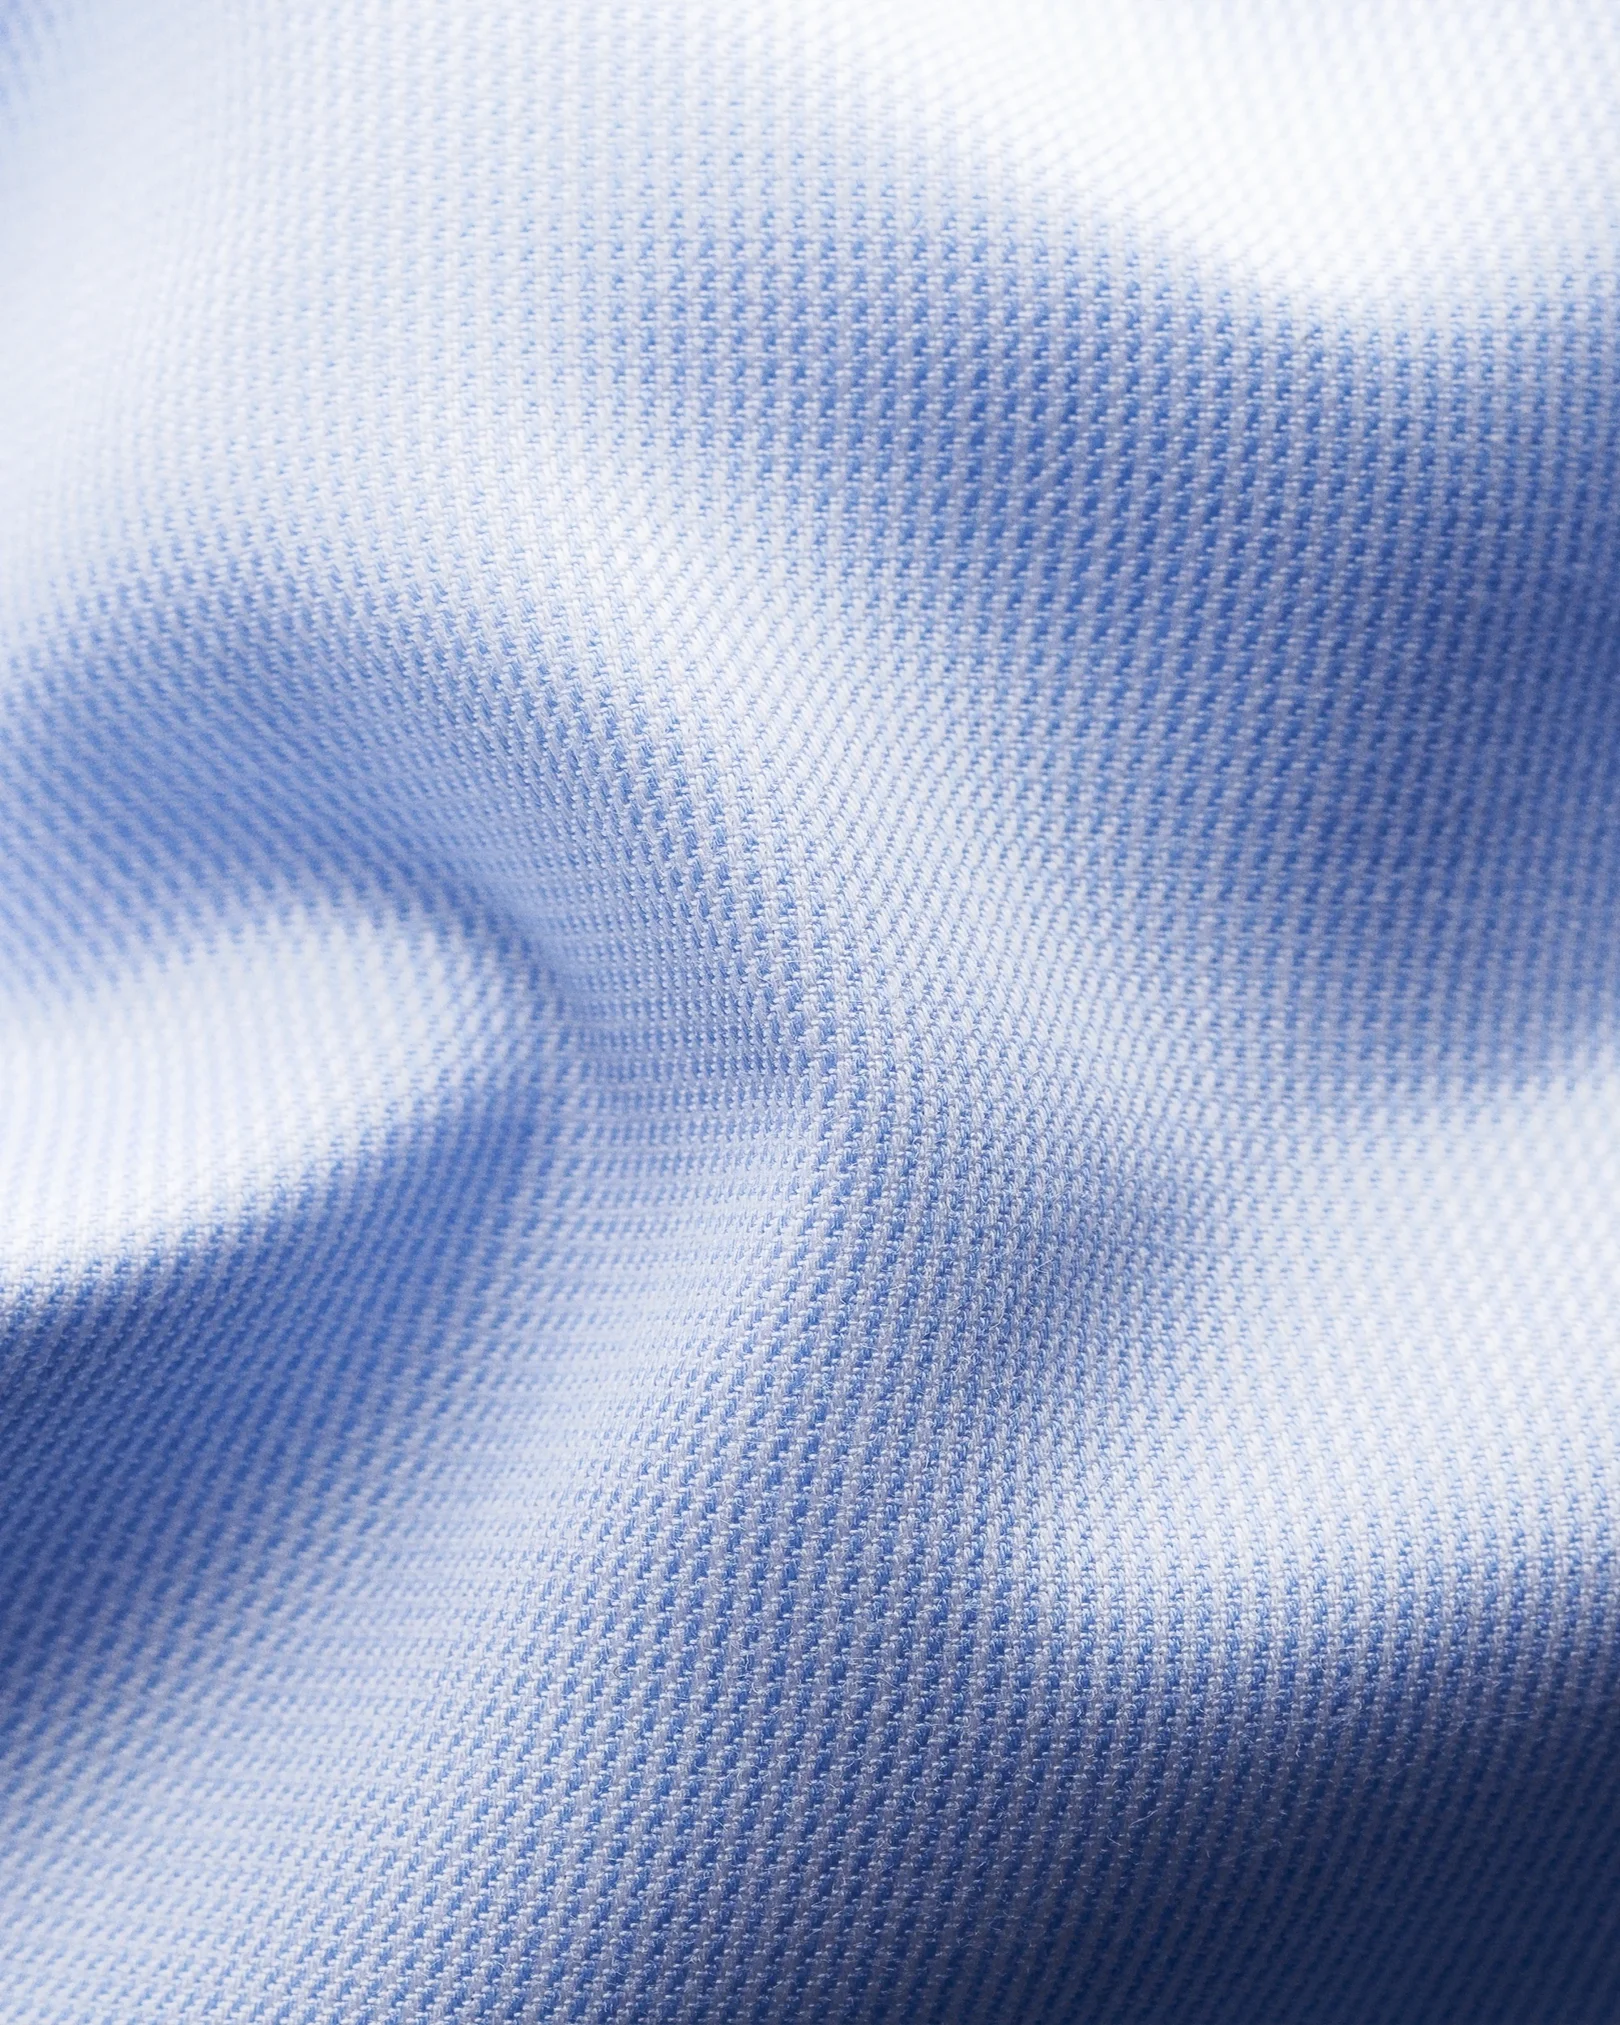 Eton - light blue royal twill shirt extreme cut away